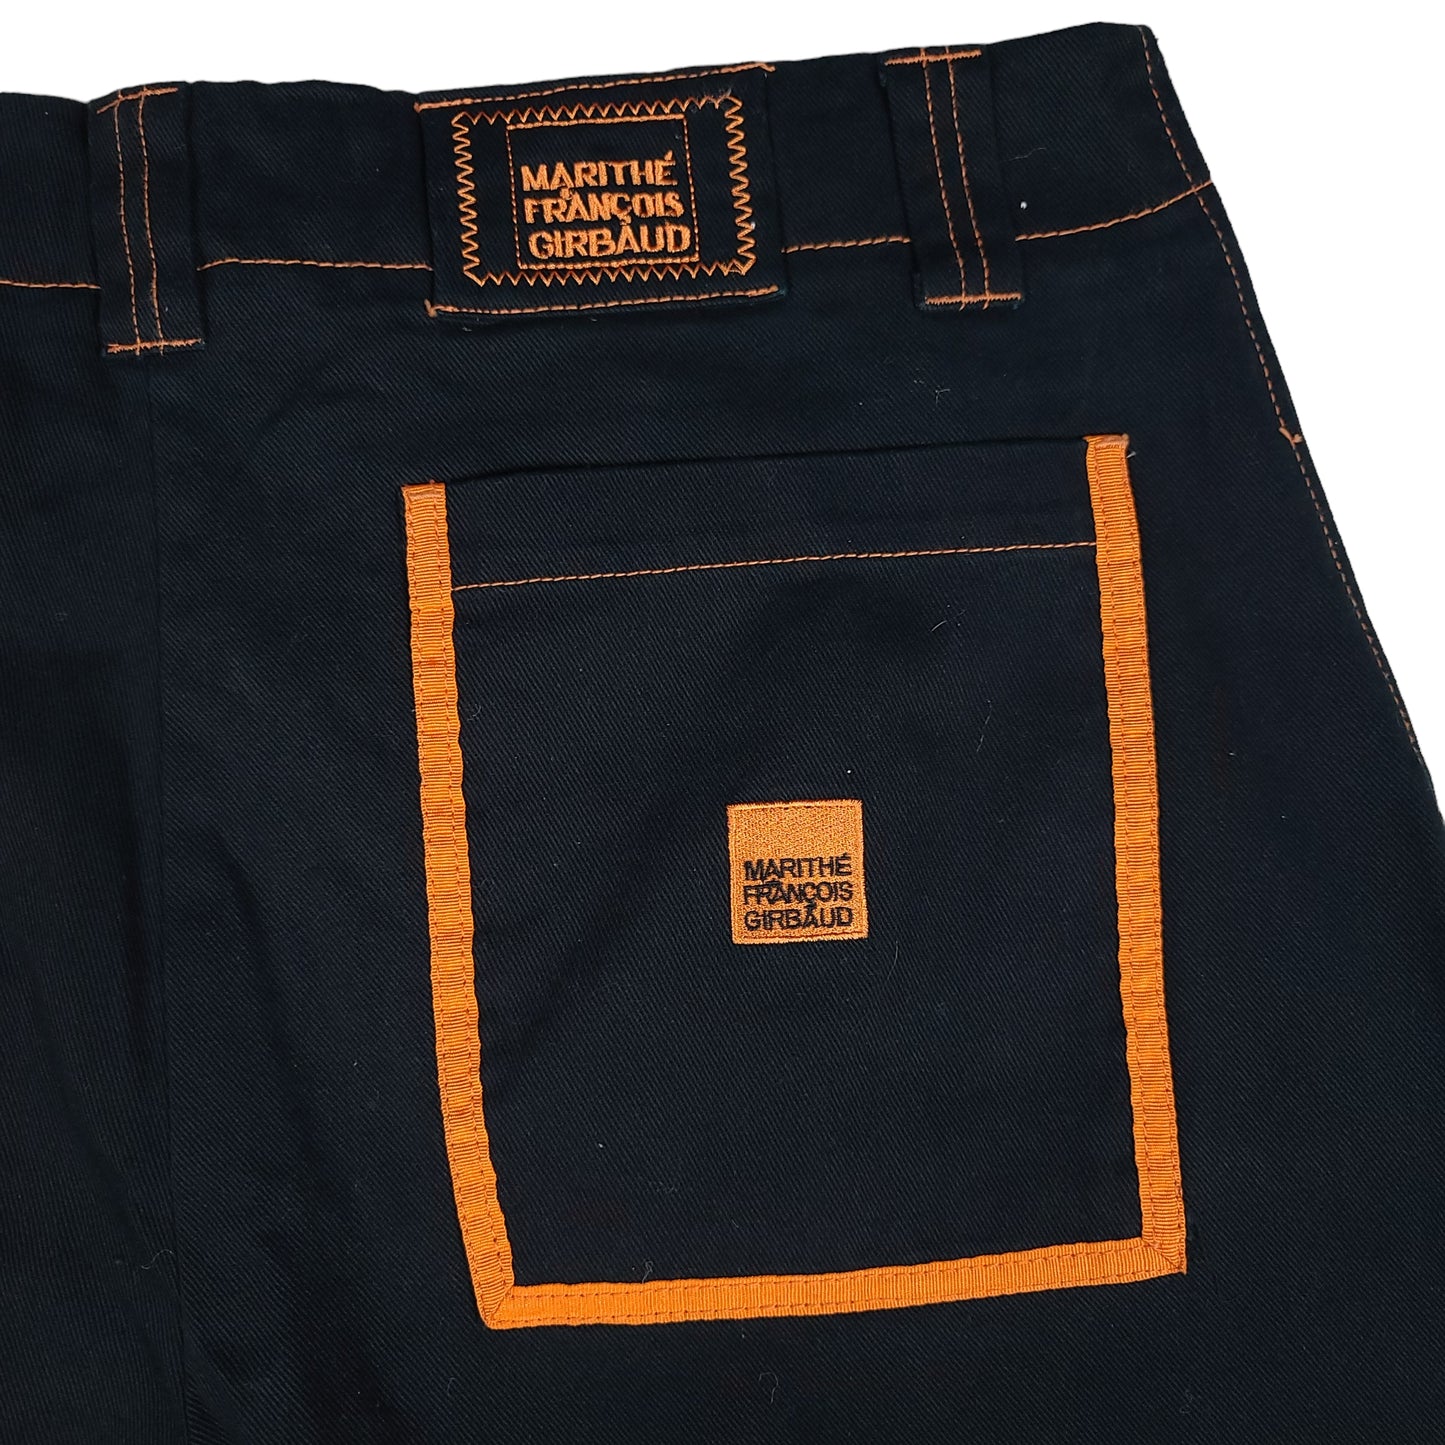 Marithe Francois Girbaud Black Orange Pants